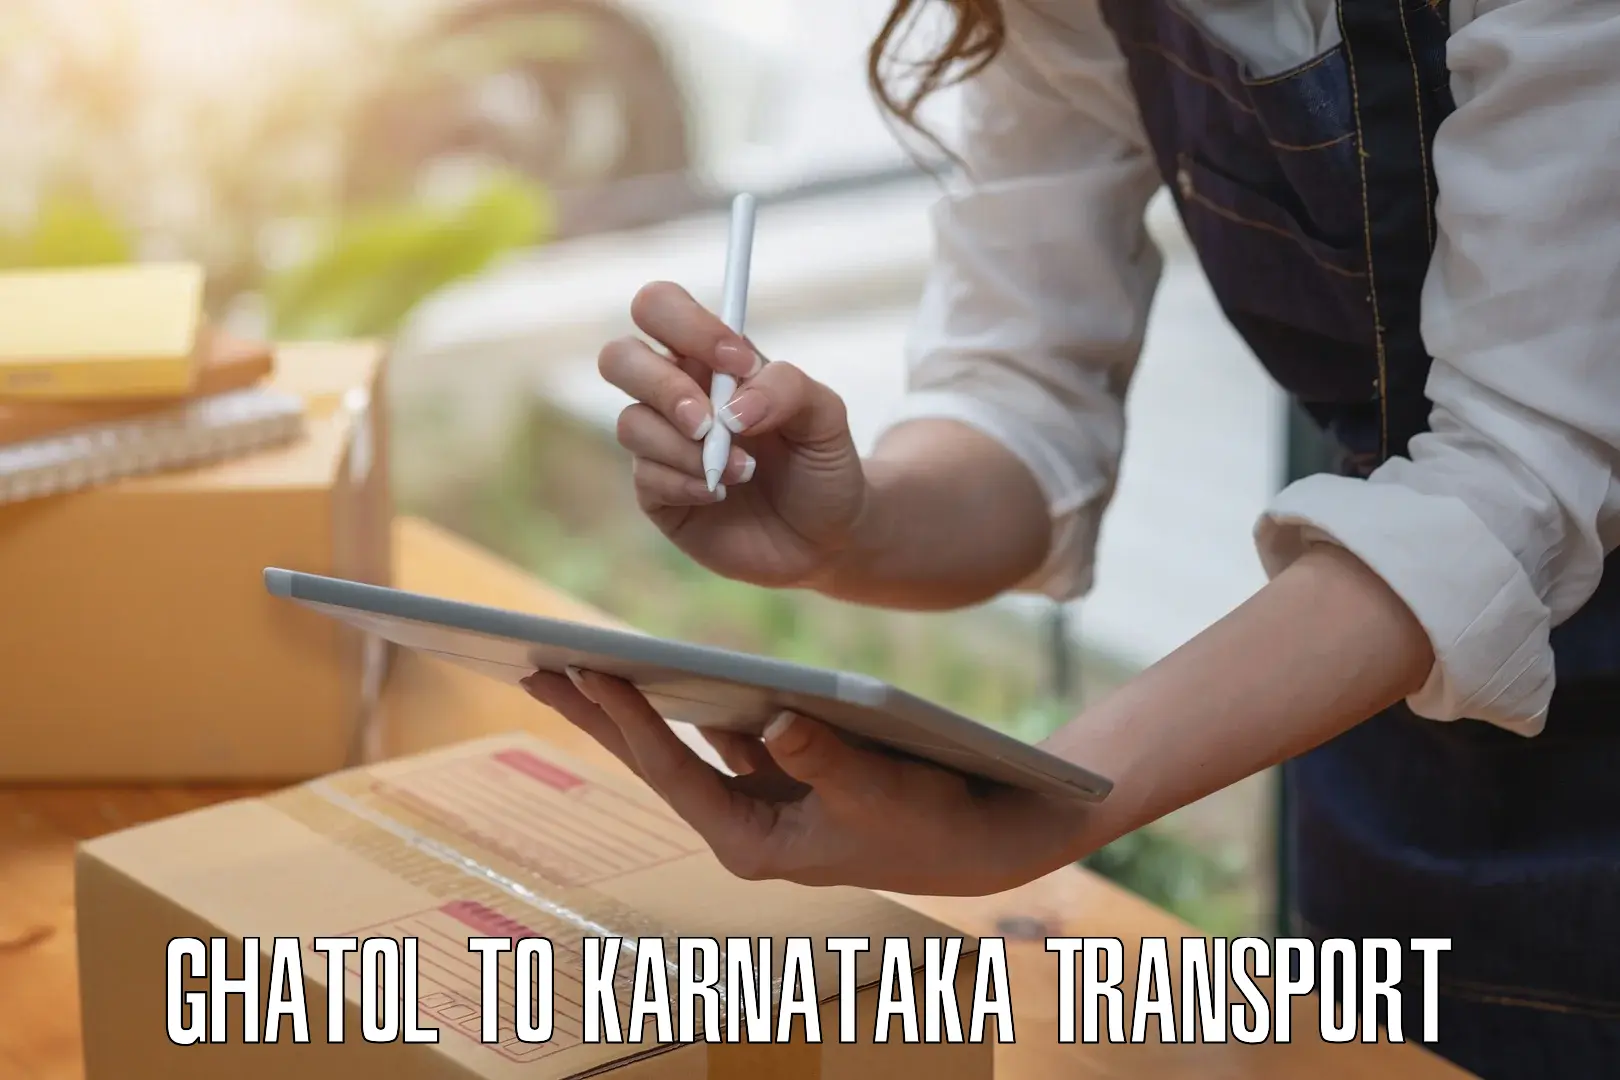 Bike transport service Ghatol to Karnataka